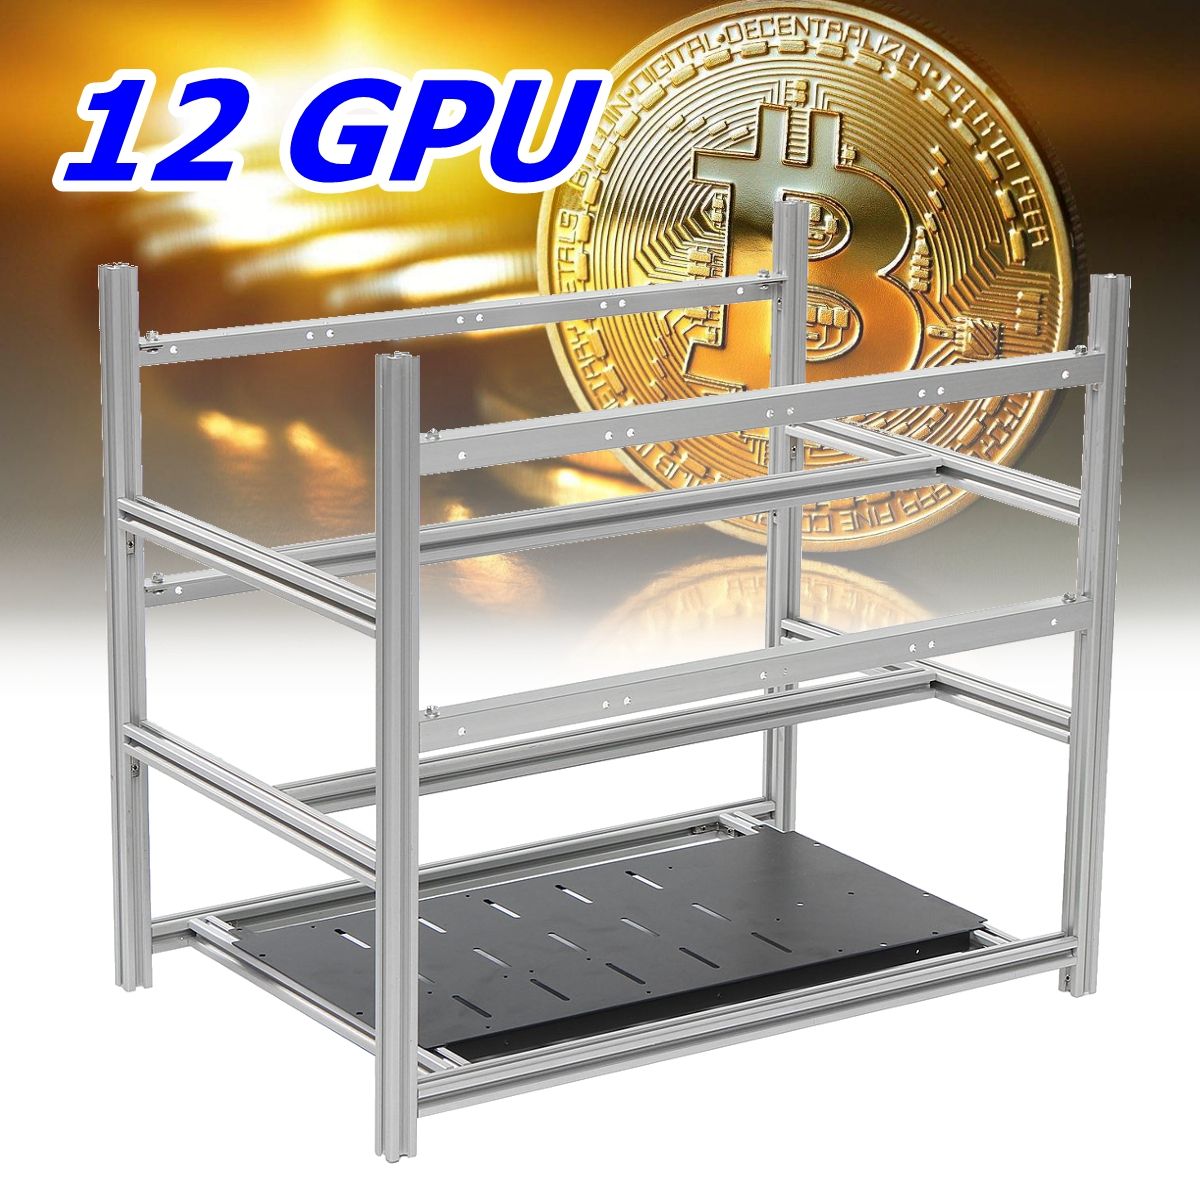 12-GPU-Steel-Coin-Miner-Mining-Frame-Steel-Case-LED-Light-With-16-Fans-For-ETH-ZECBTB-1264444